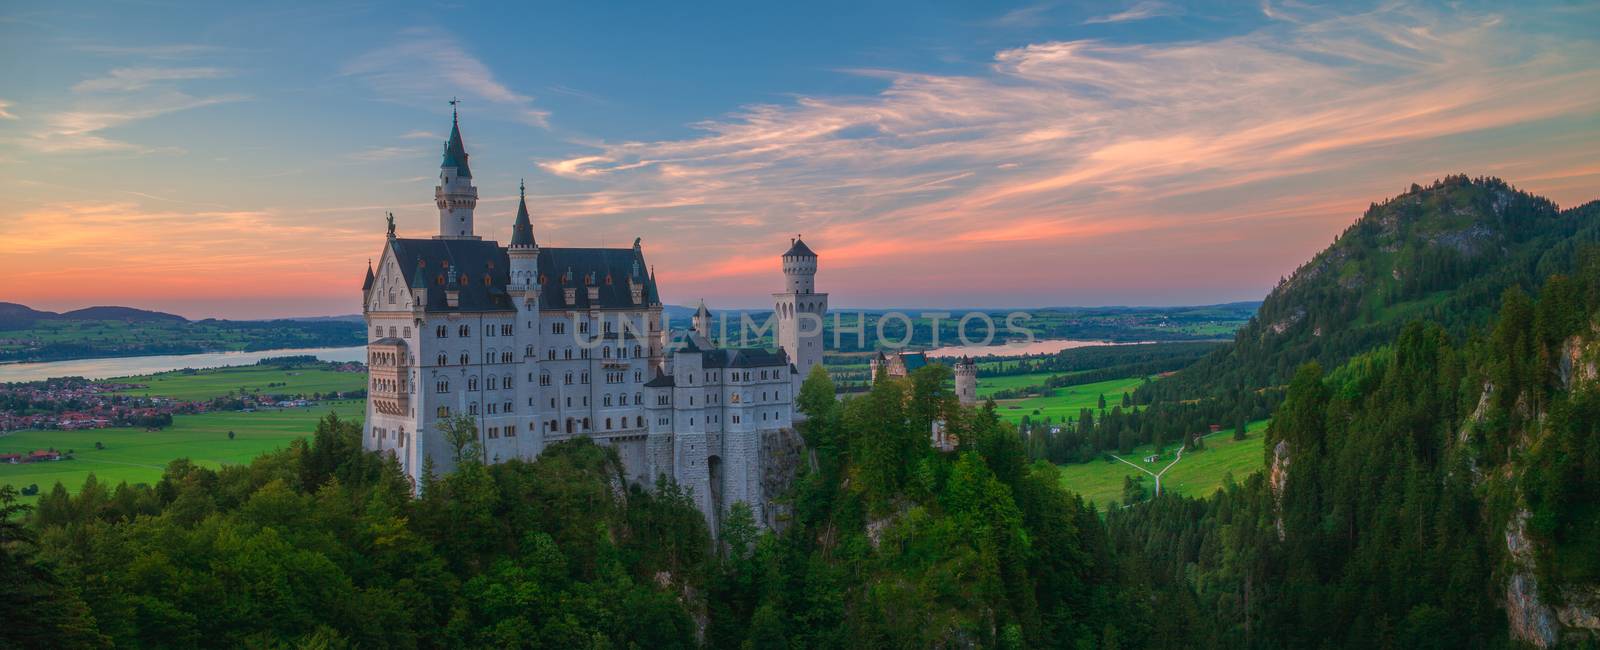 Schloss Neuschwanstein is a very popular castle in Bavaria, Germany.